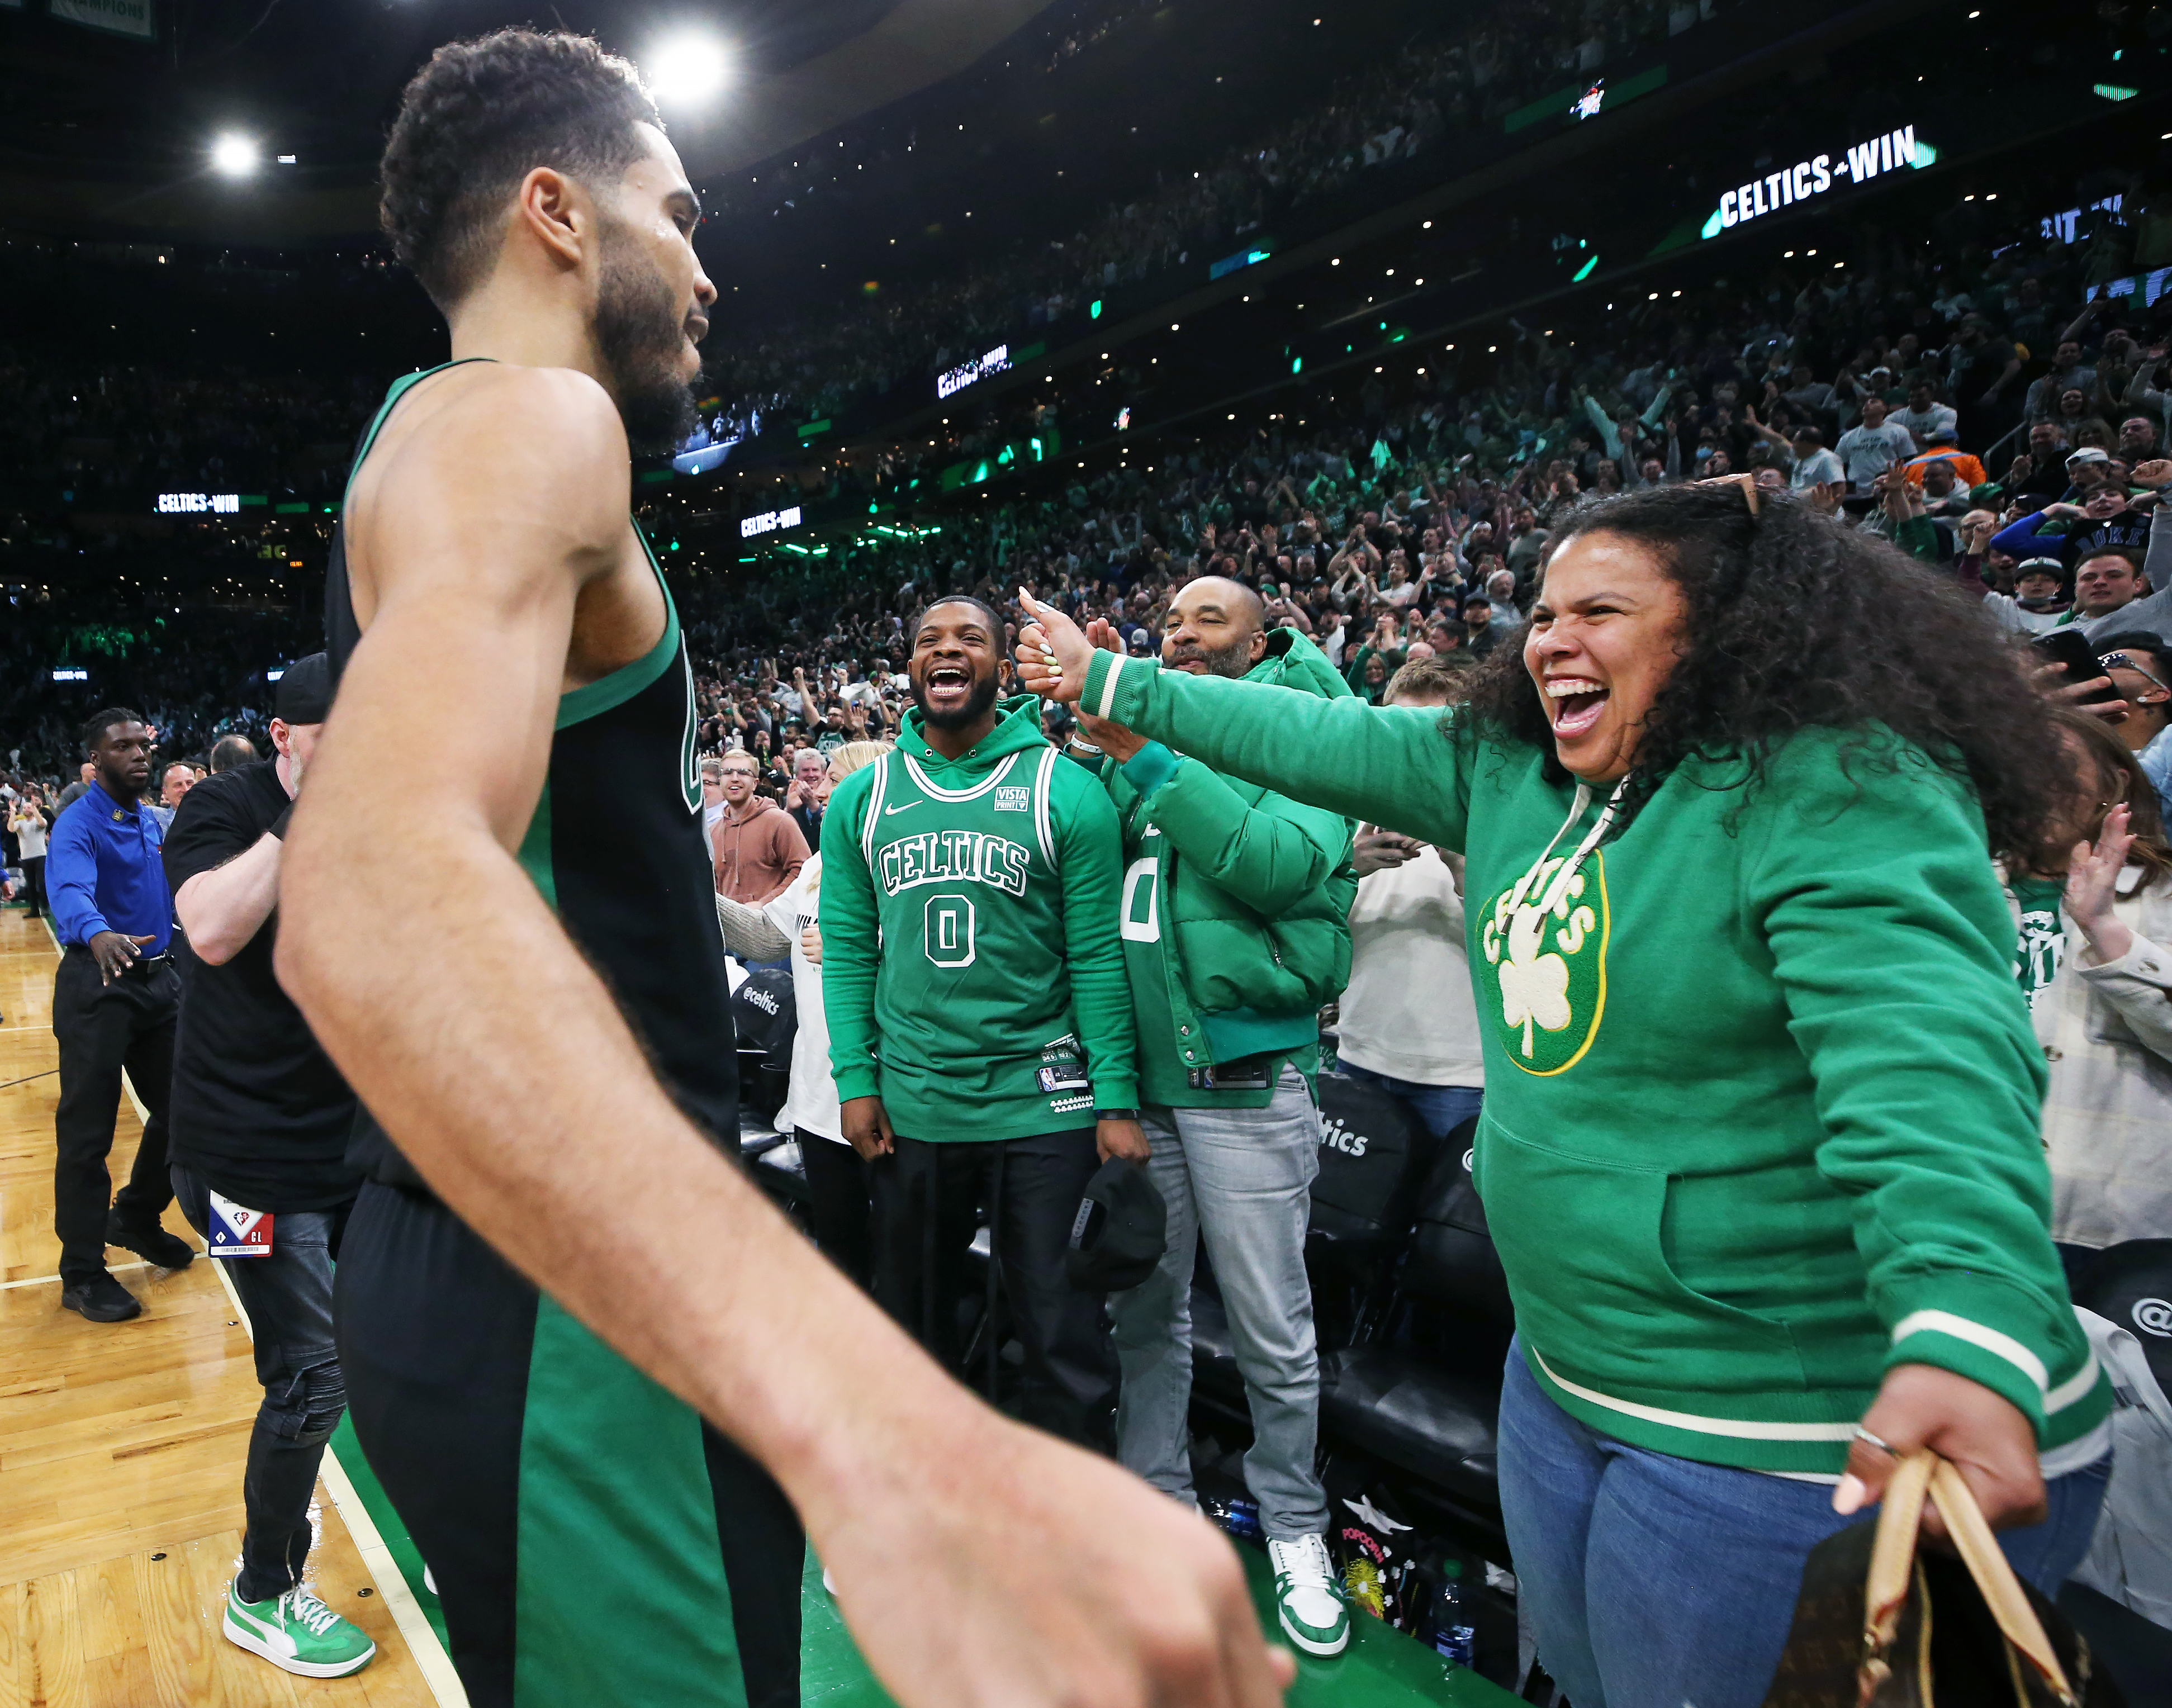 Celtics gracious hosts as Nets claim victory - The Boston Globe